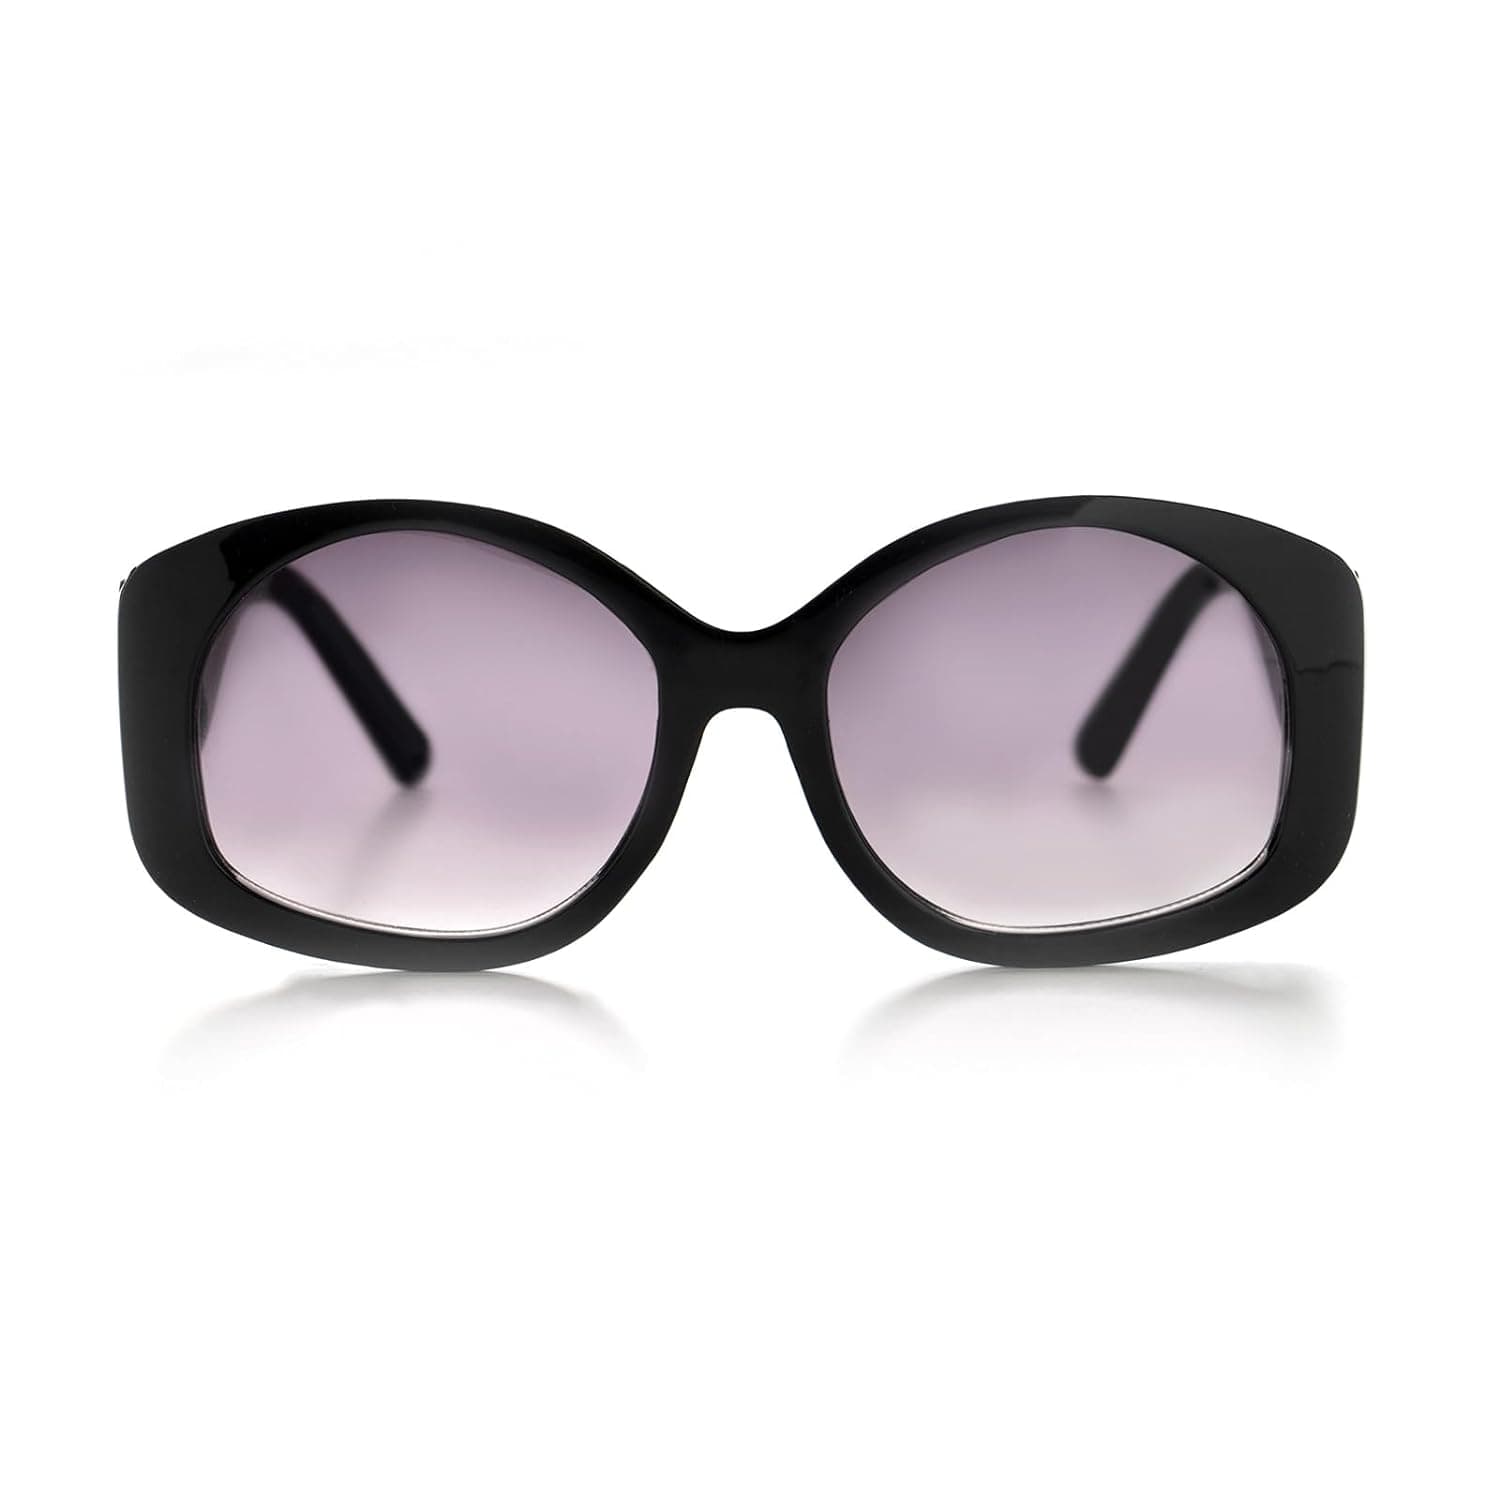 Optimum Optical Sunglasses-Allure/Cabana Bae - Infinity Raine